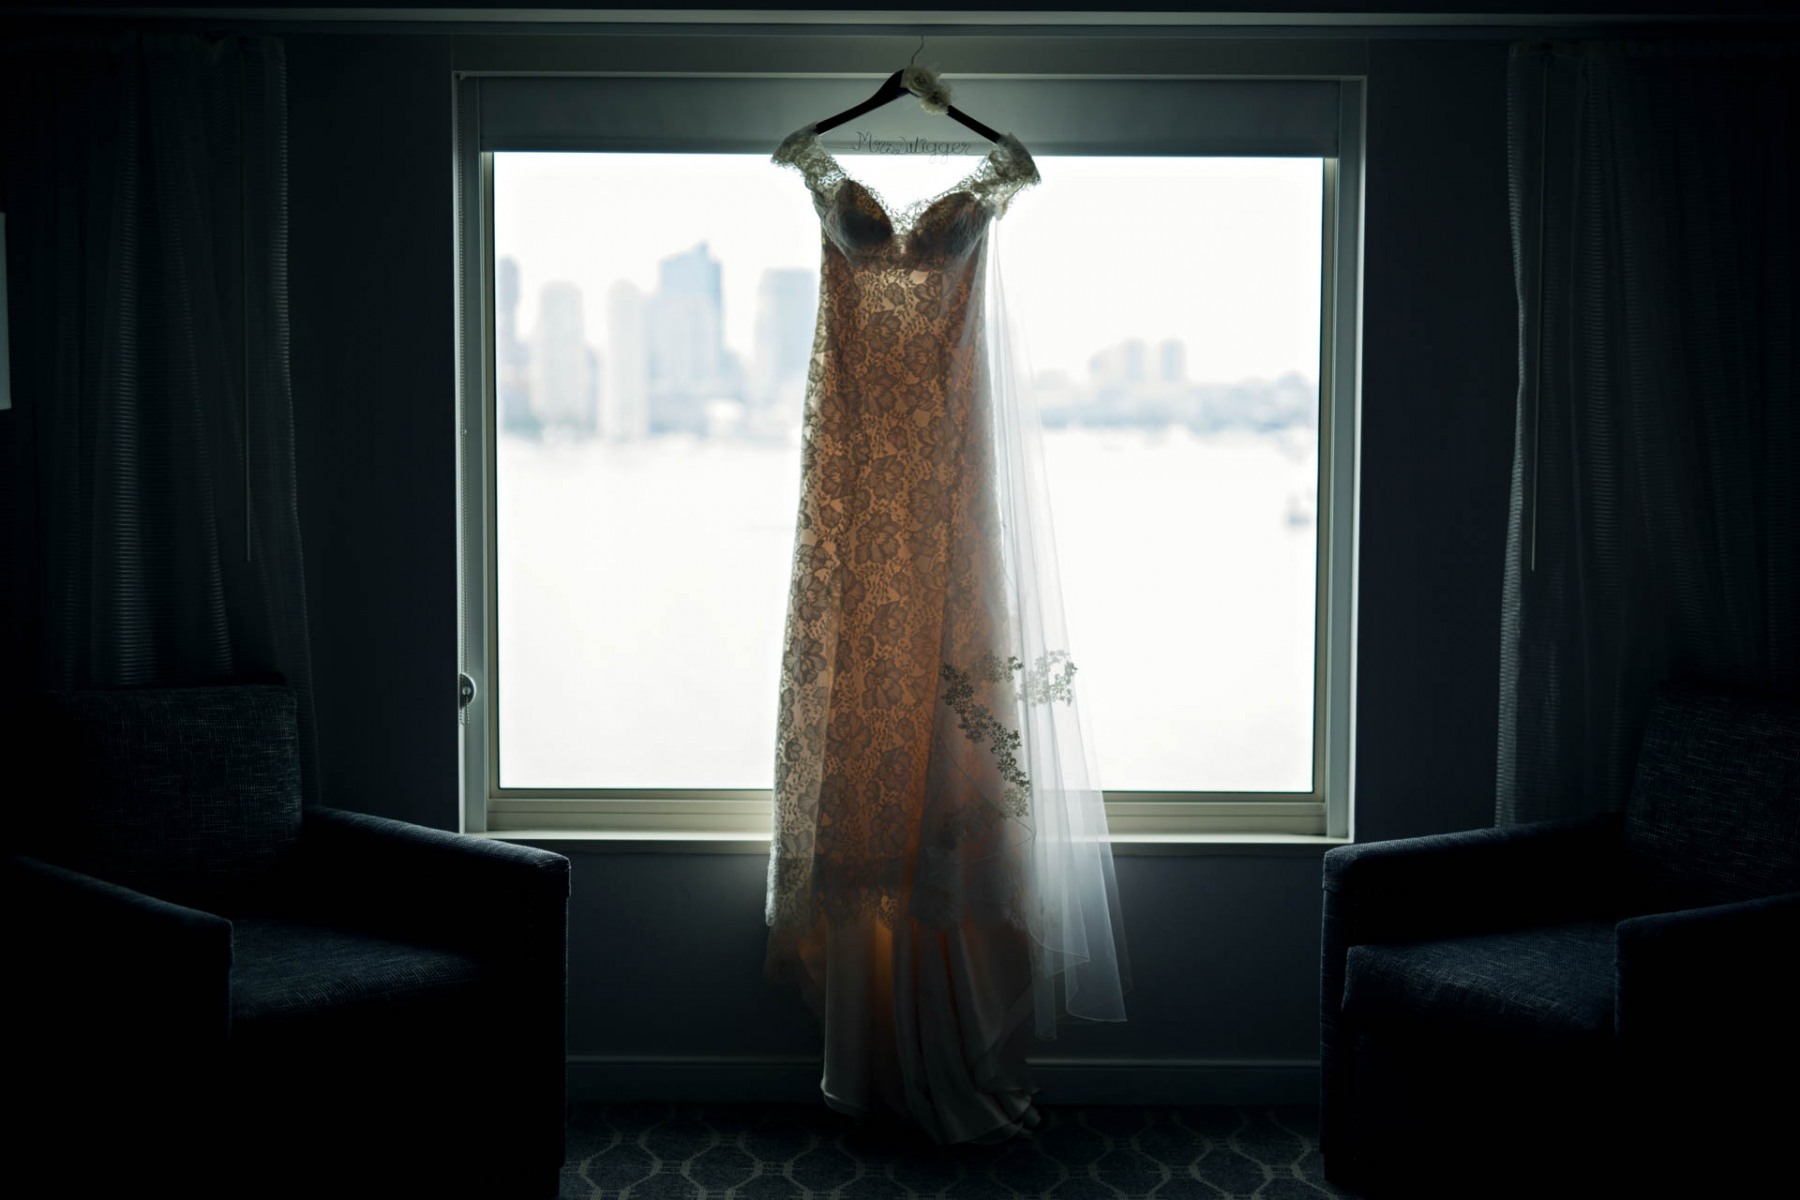 hyatt-boston-harbor-wedding-dress-